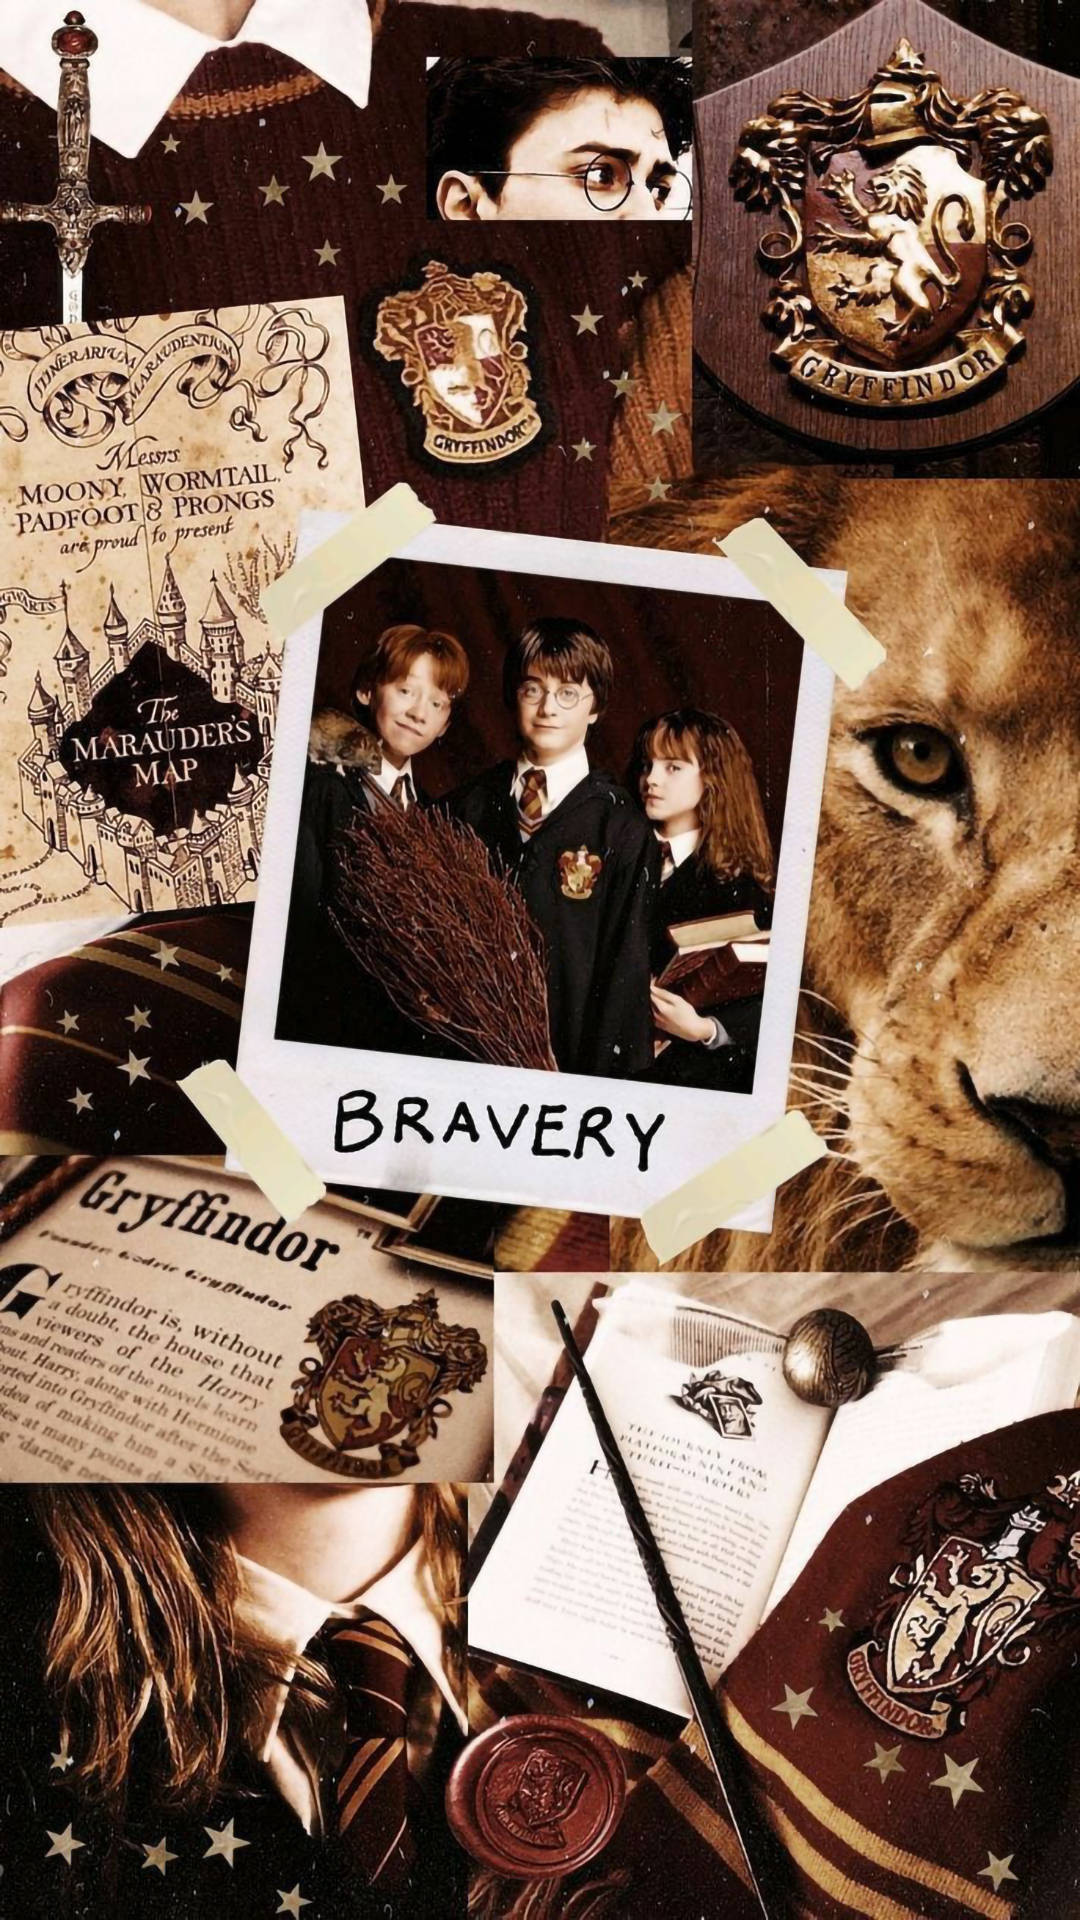 Wallpaper ID: 128530 / Harry Potter, Hogwarts, castle free download